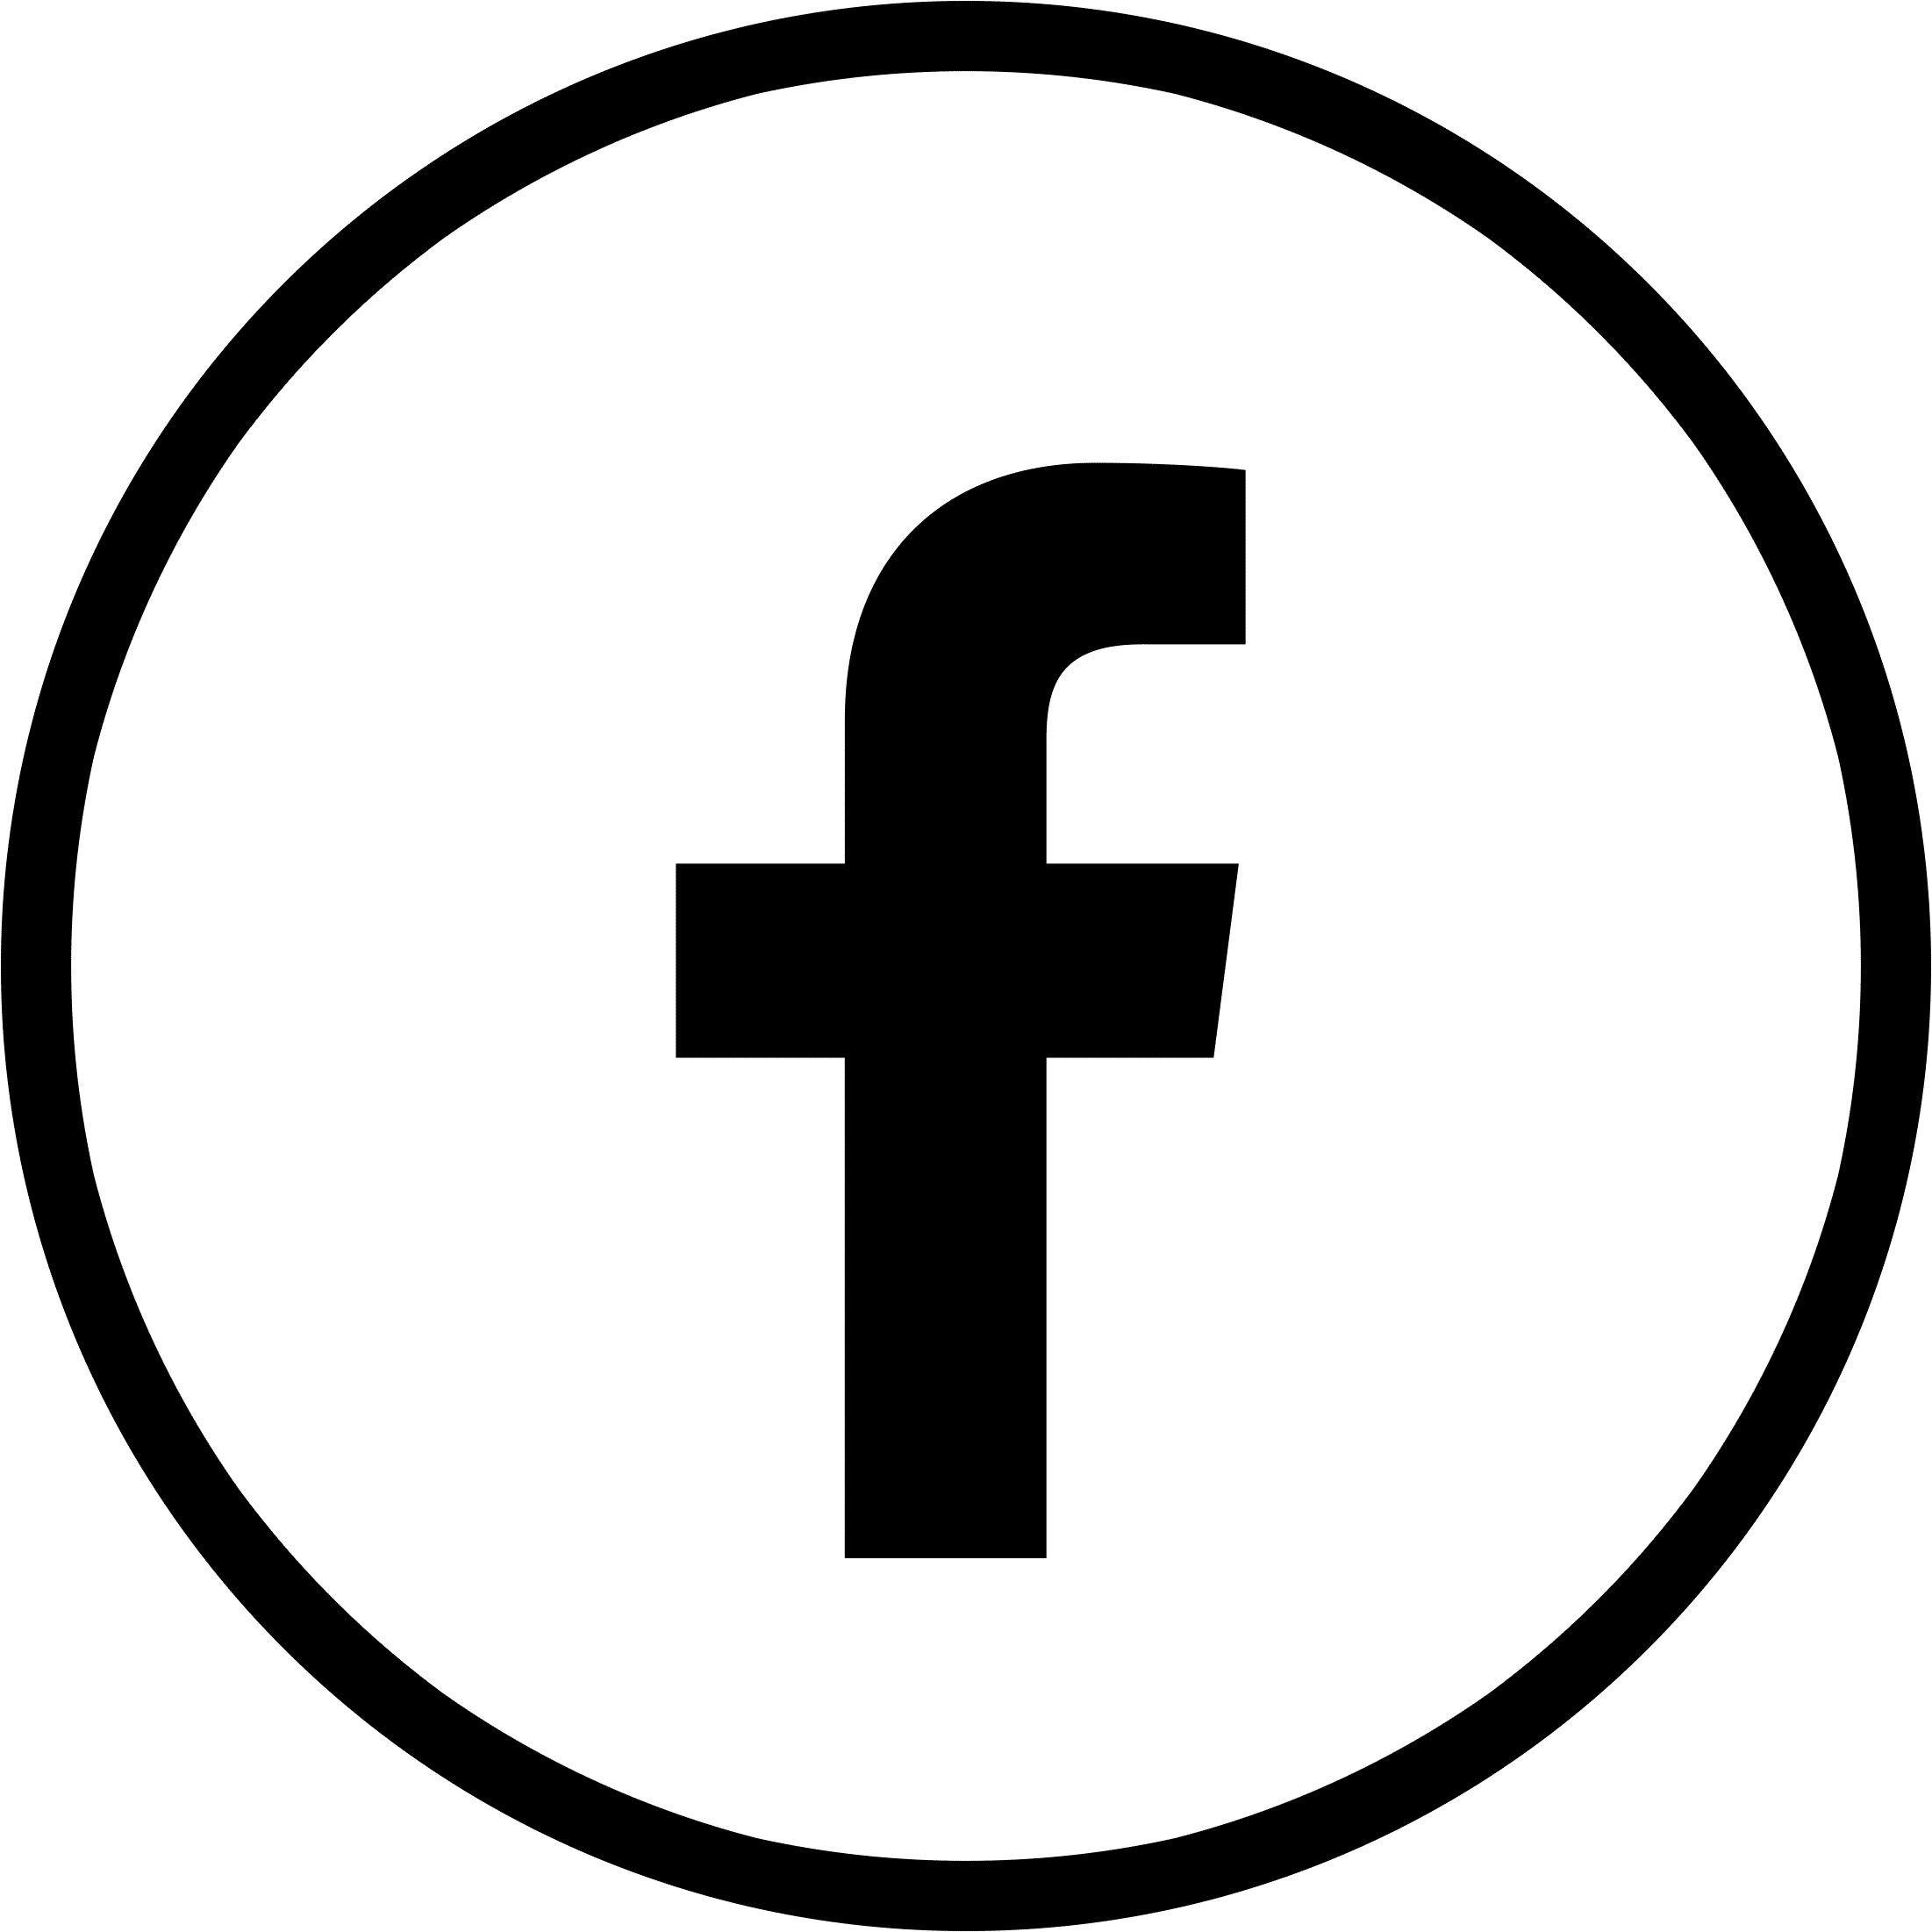 Facebook Logo PNG Image